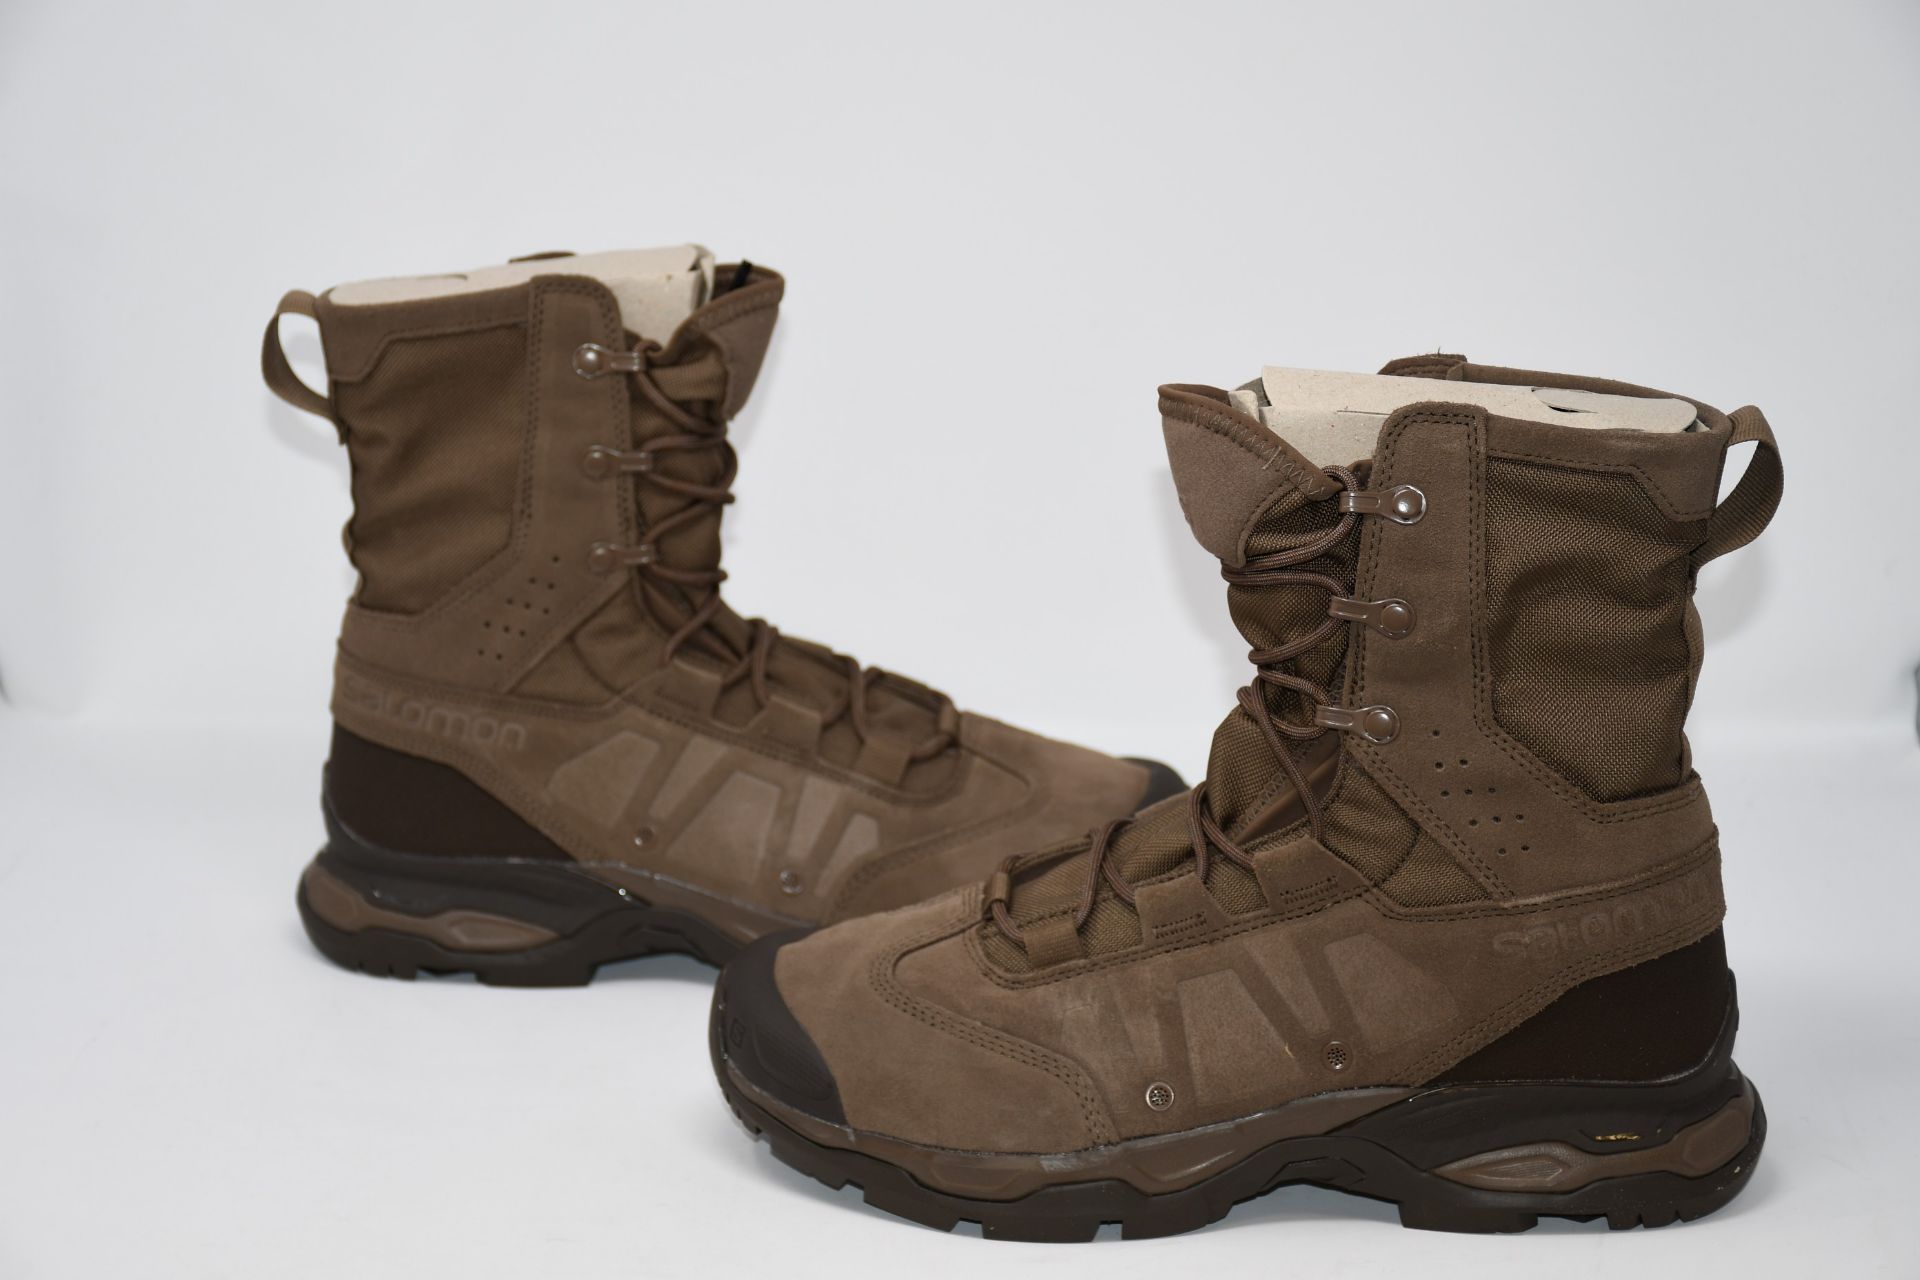 One as new Salomon Jungle Ultra boots size 9 (Box damaged).